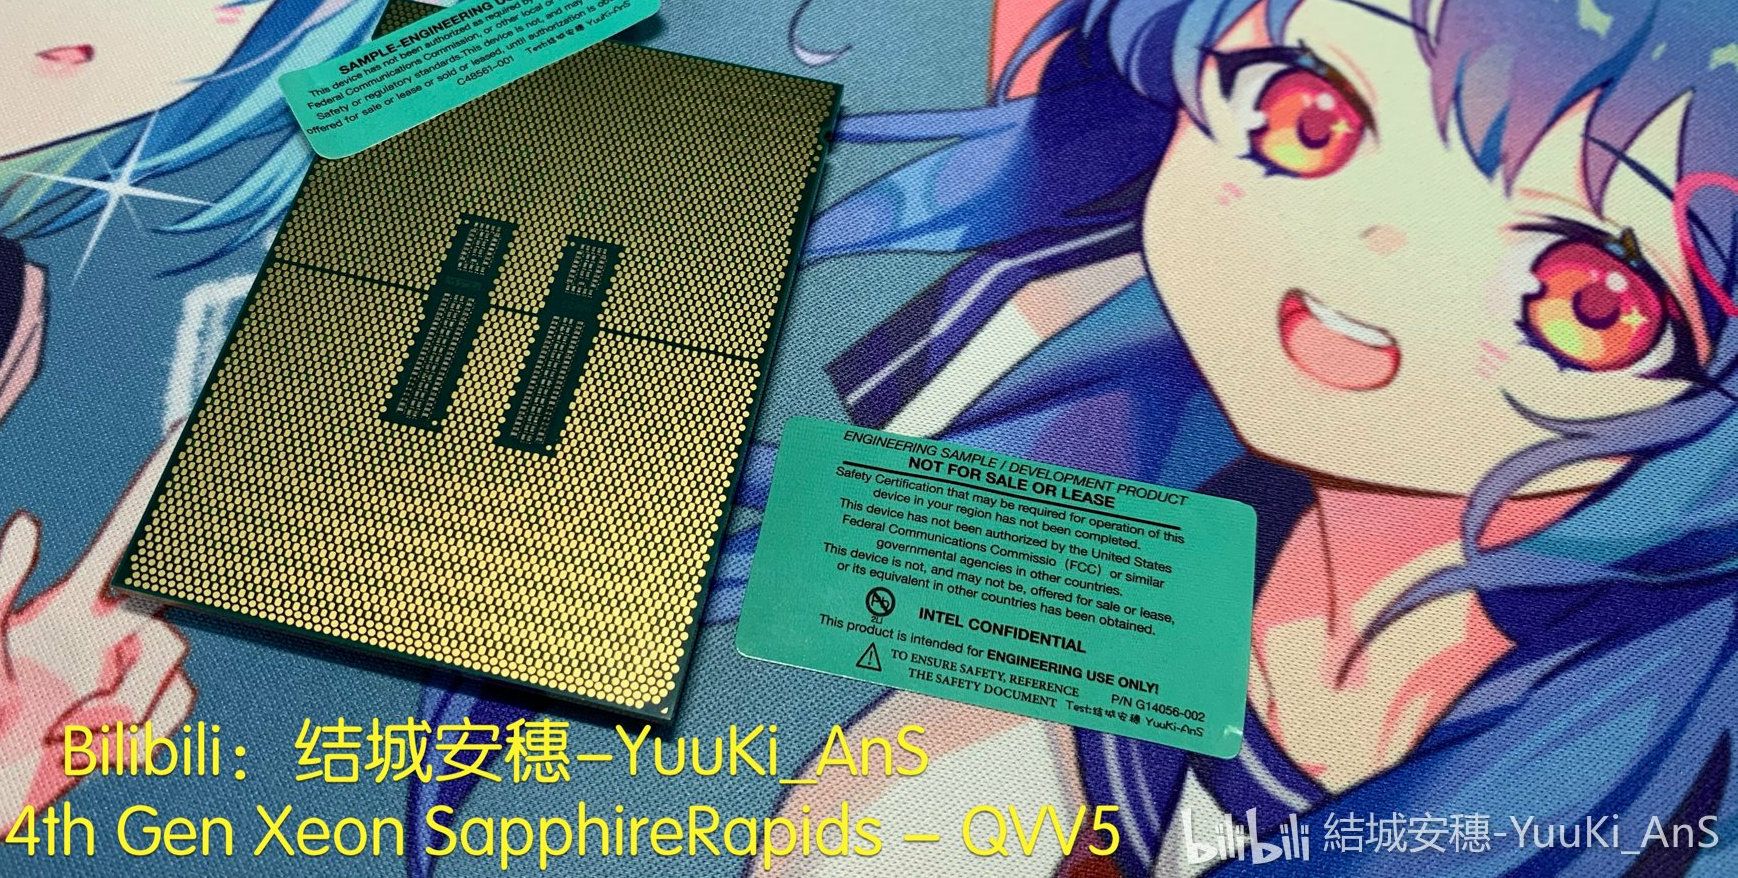 Intel Sapphire Rapids SP 02